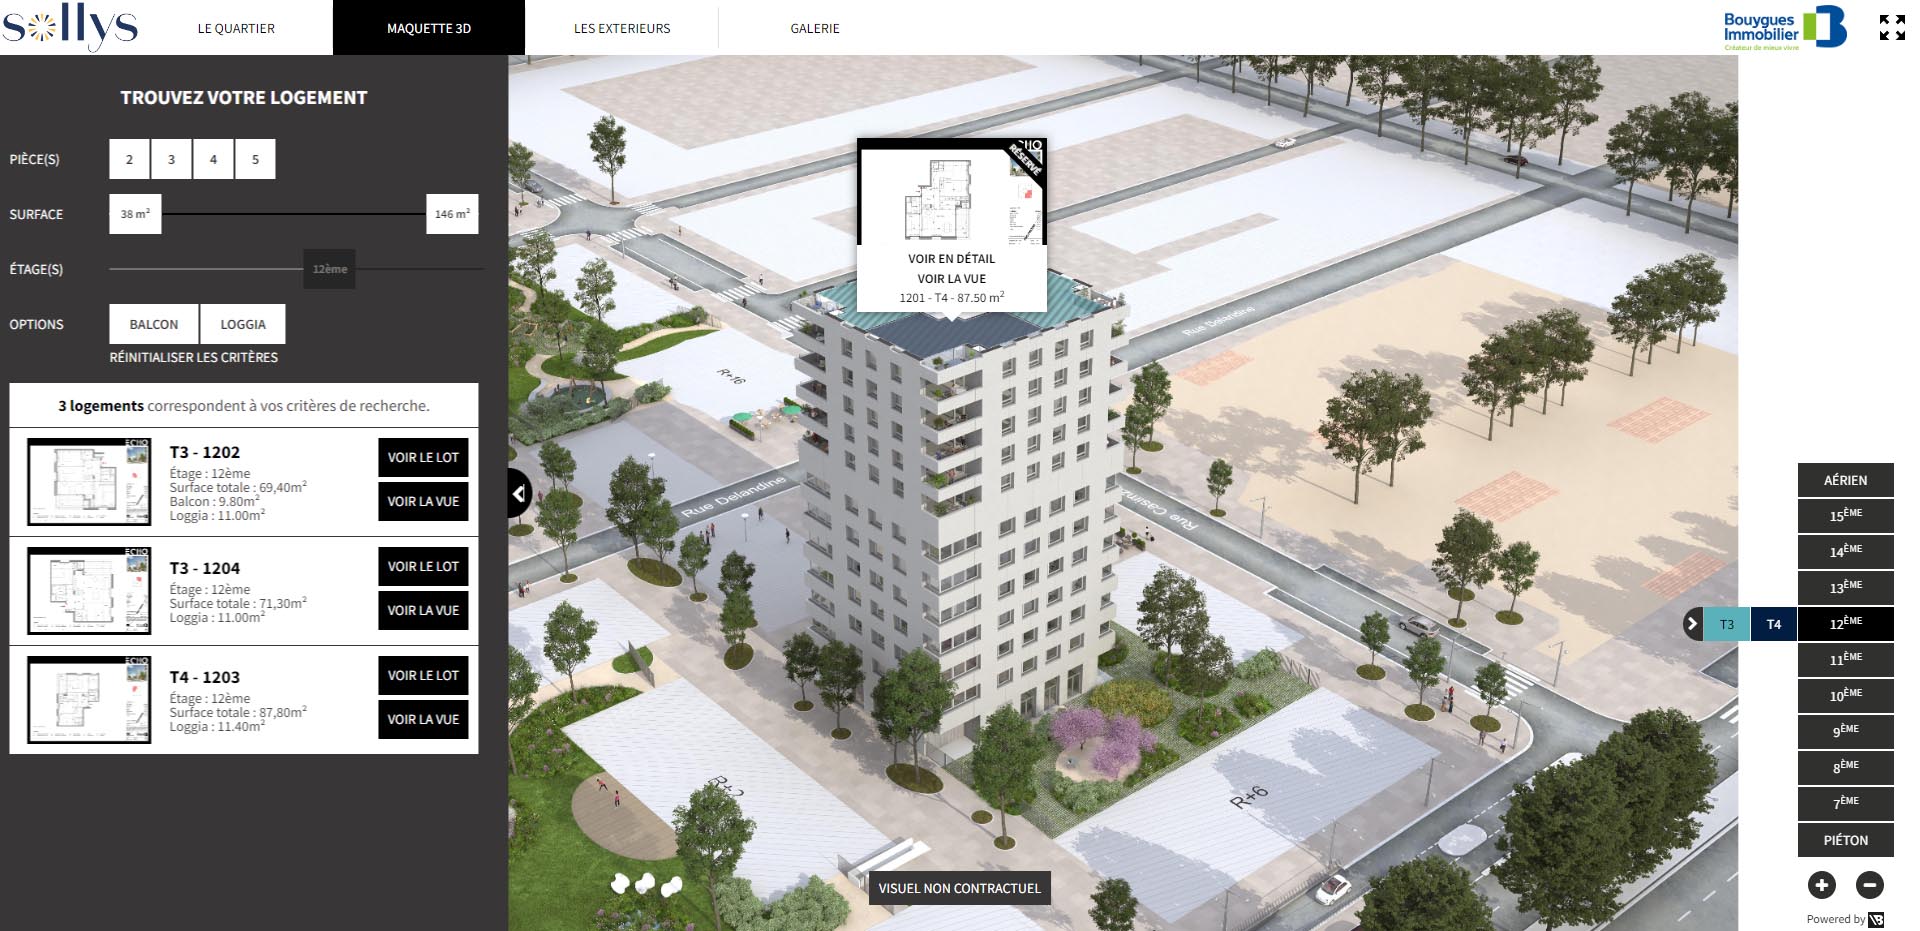 Sollys - Bouygues Immobilier - Maquette 3D